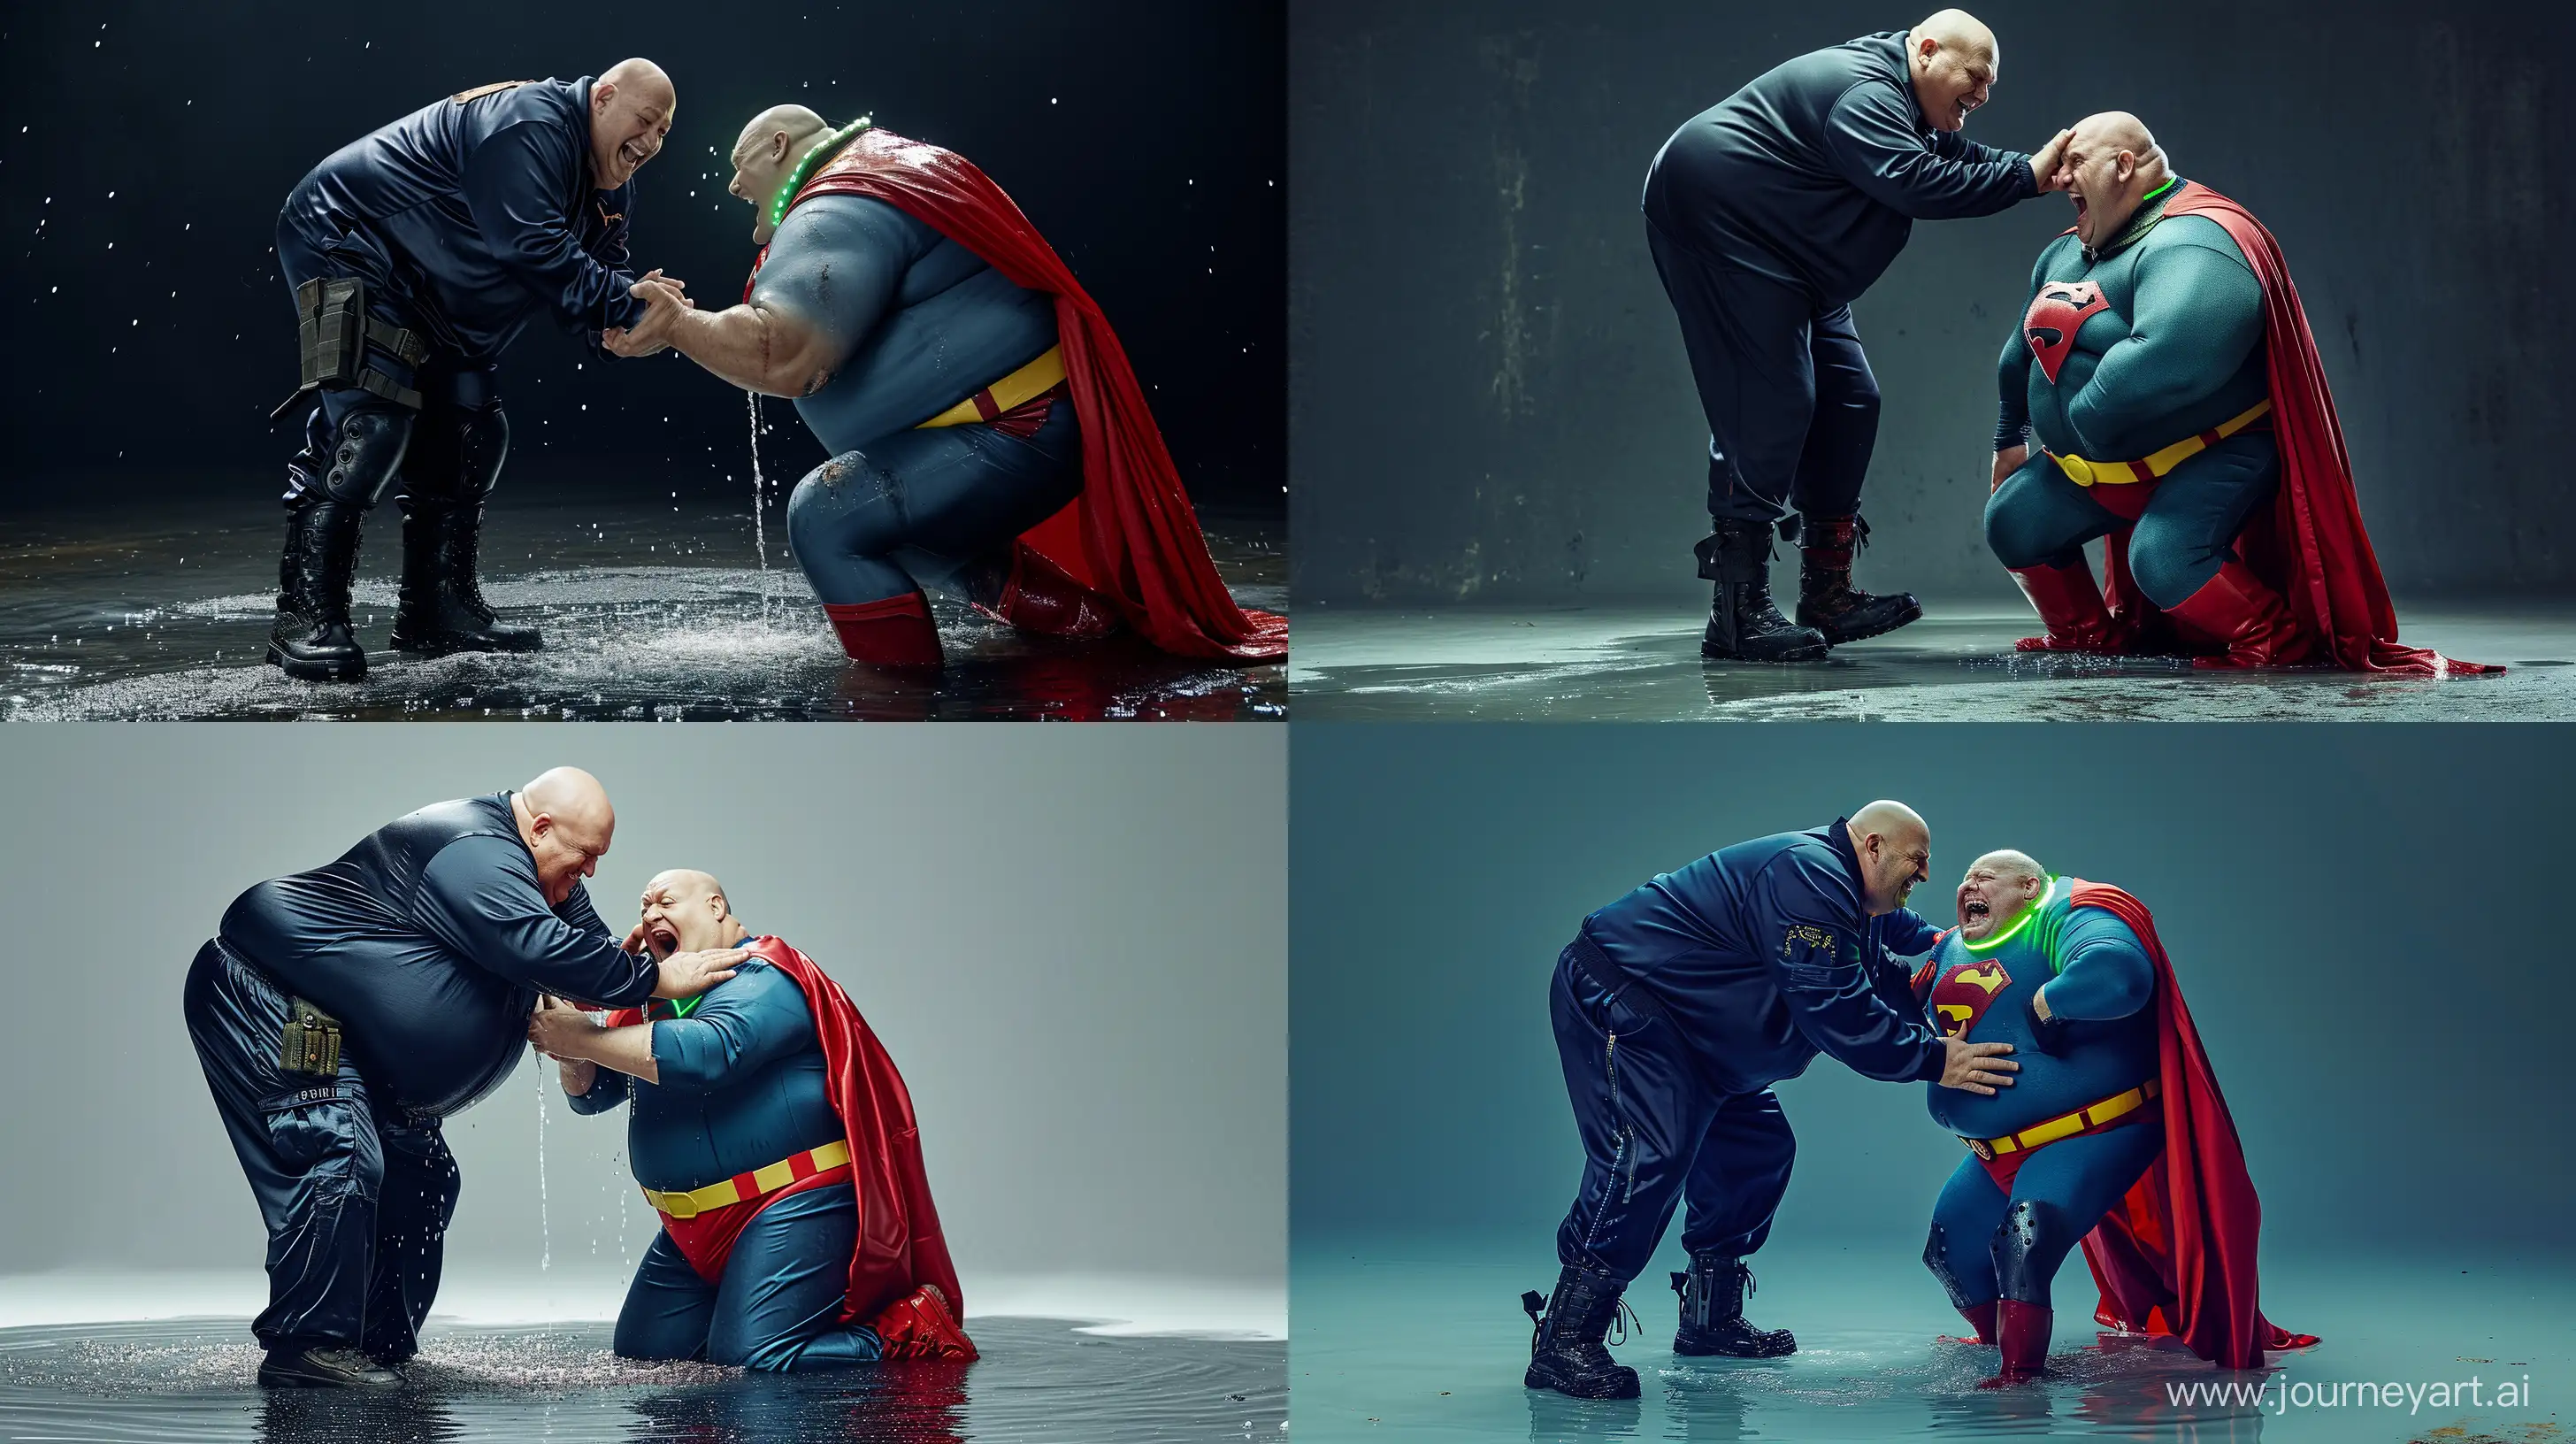 Elderly-Superman-Confrontation-in-Water